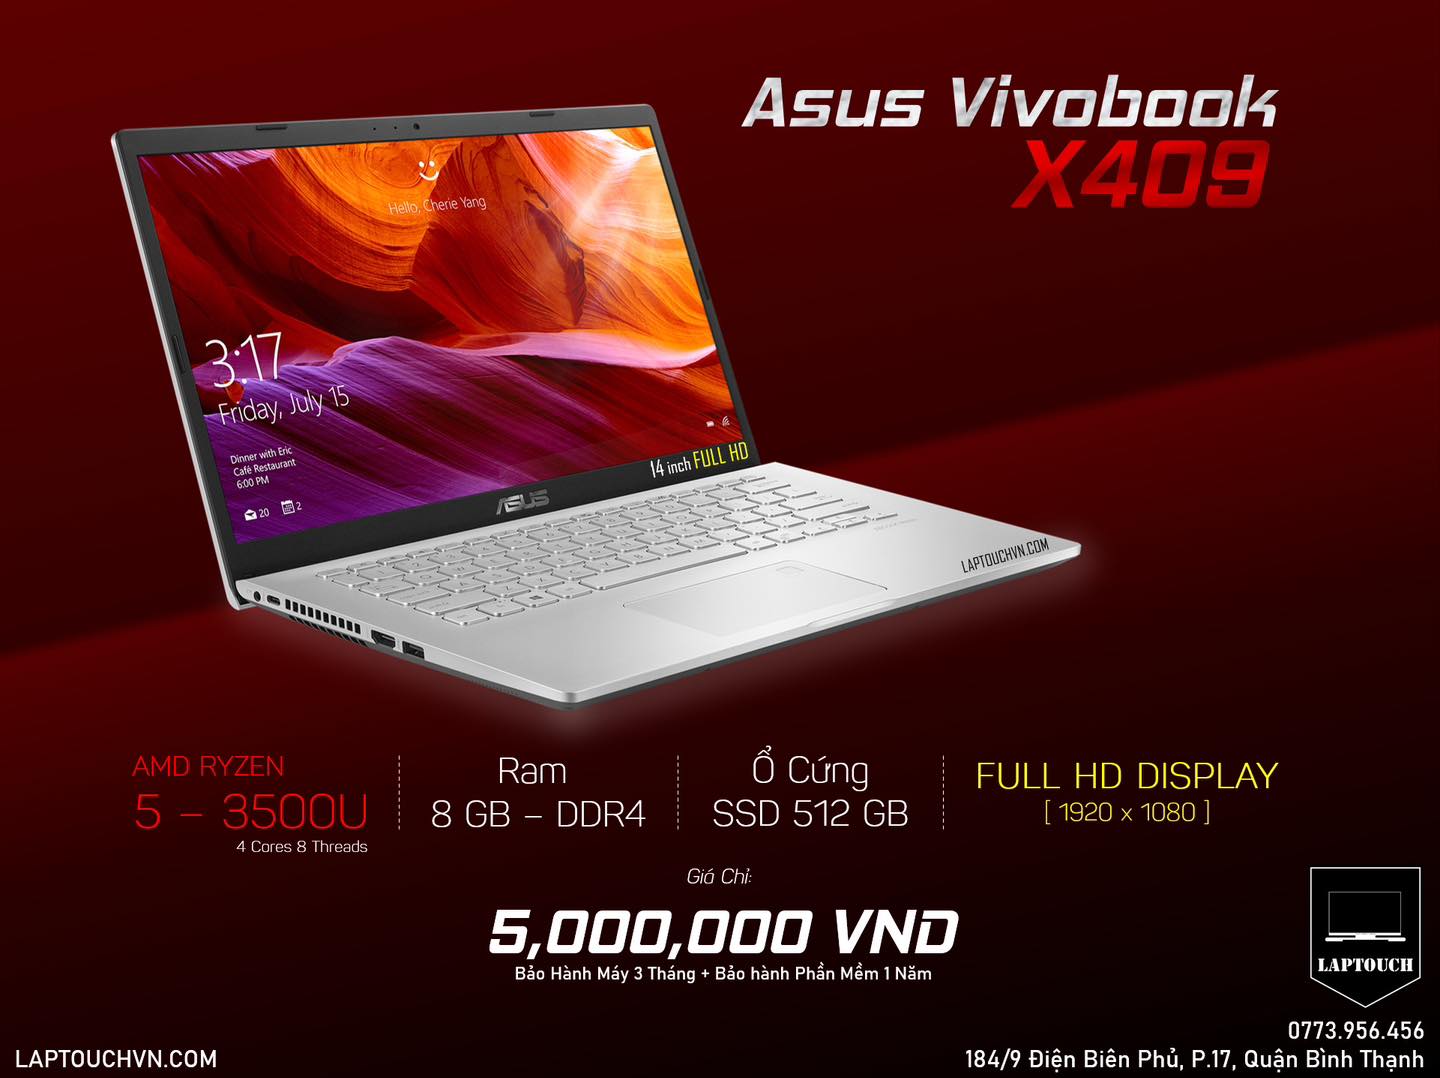 Asus Vivobook X409